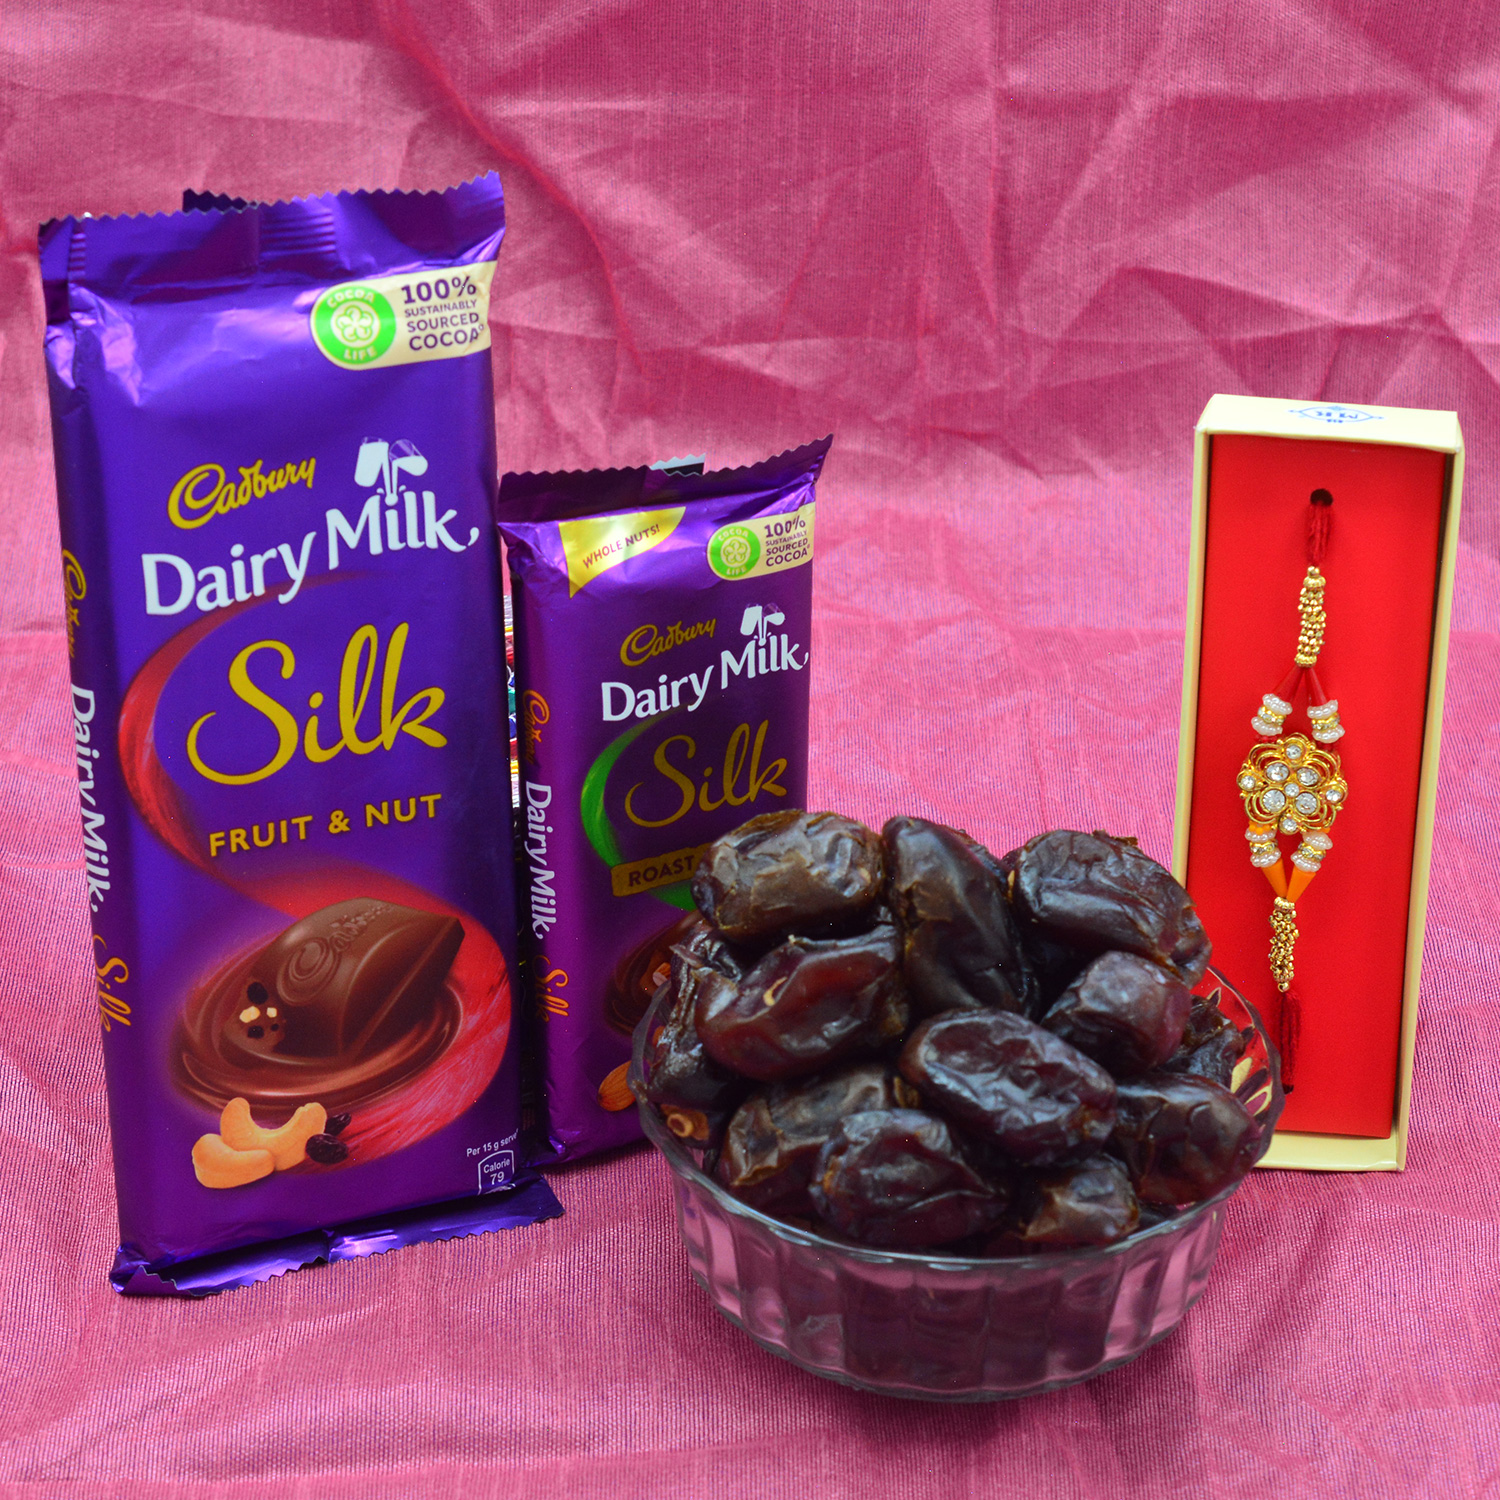 Dairy Milk Pair of Silk Chocolate with 1 Fancy Brother Rakhi and Pind Khajoor Dry Fruit